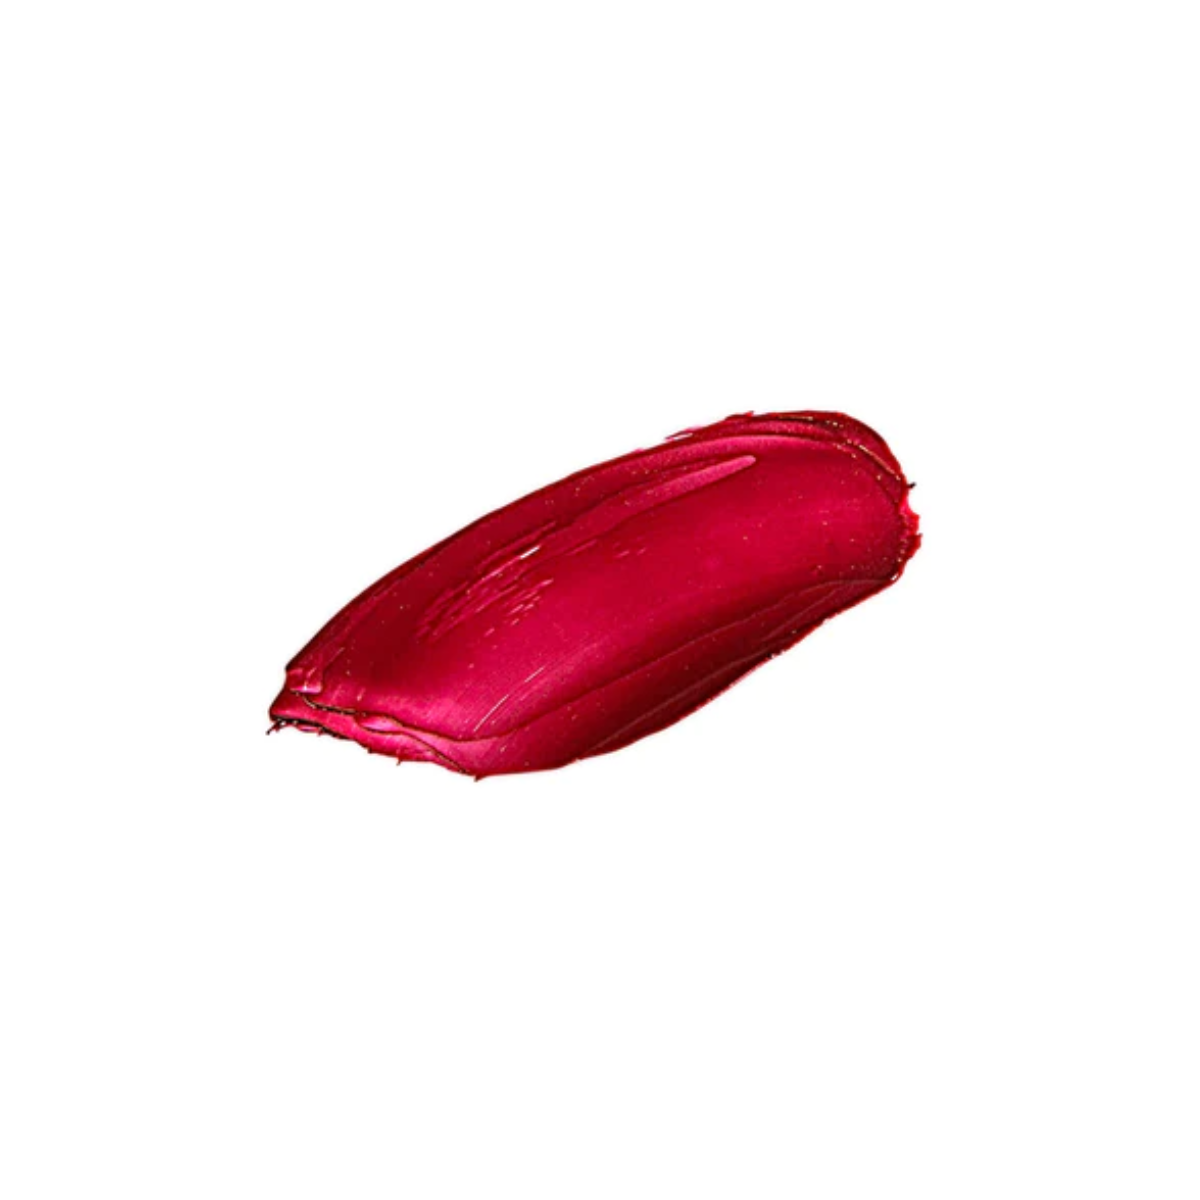 Lip Whip Color Balm - Suji